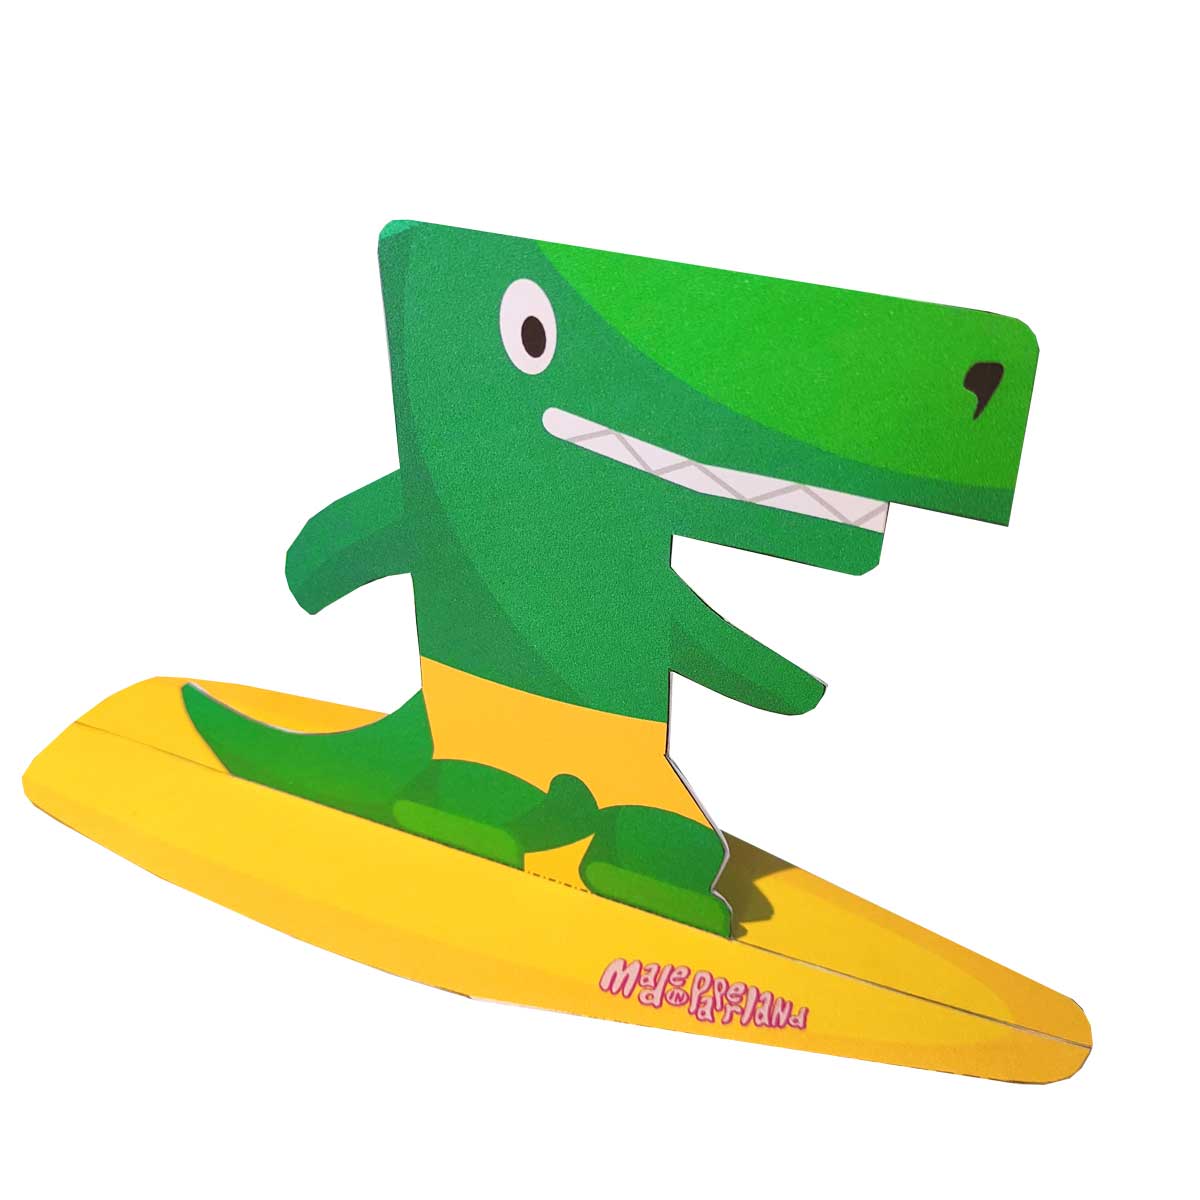 Crocodile Surfer free printable paper model